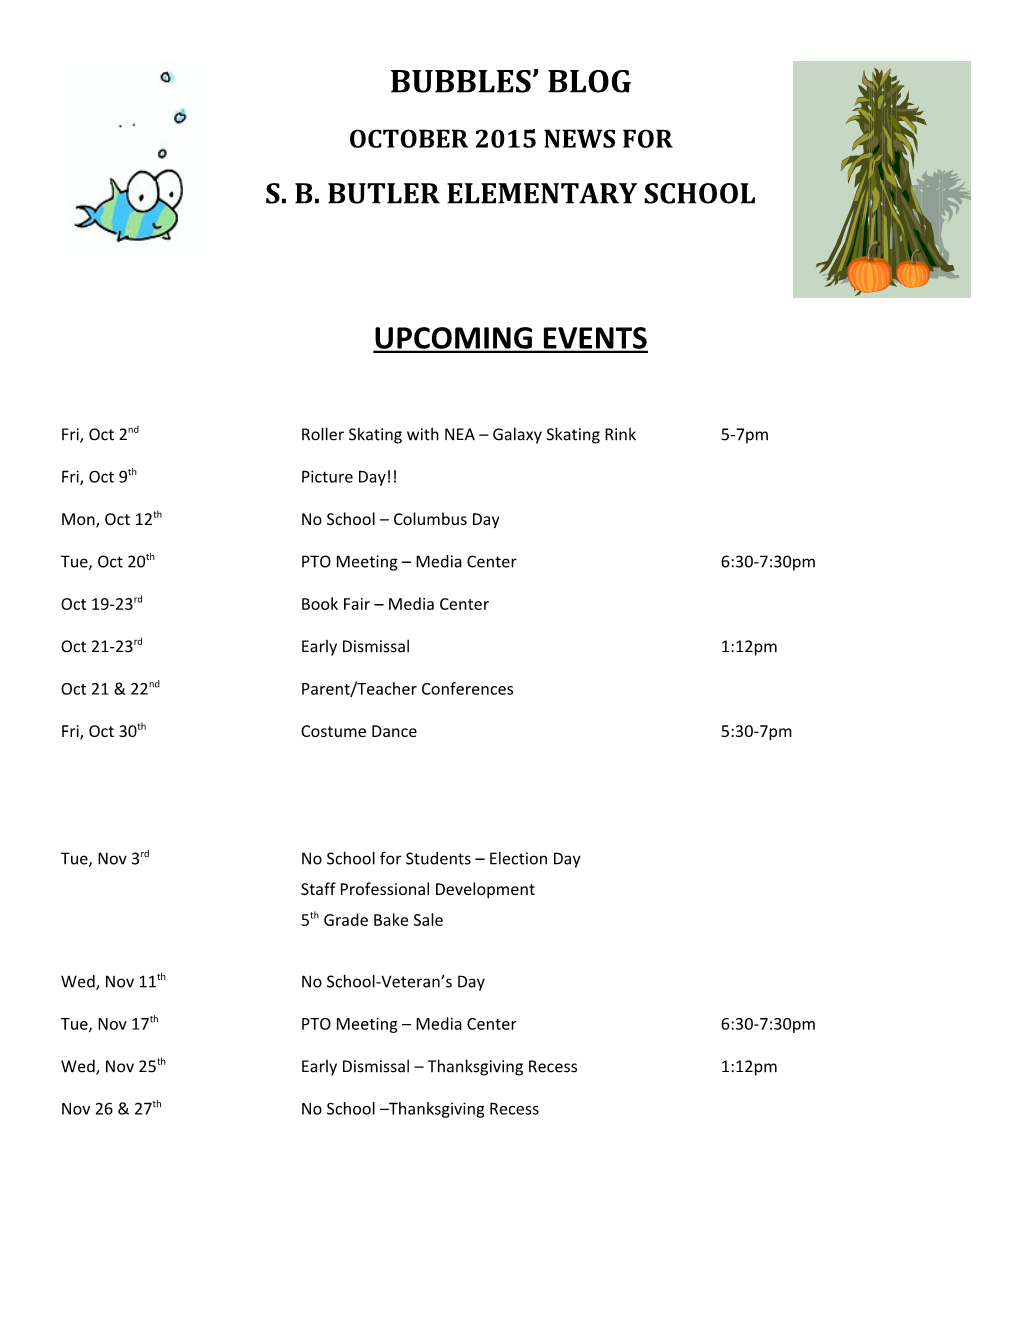 S. B. Butler Elementary School s1